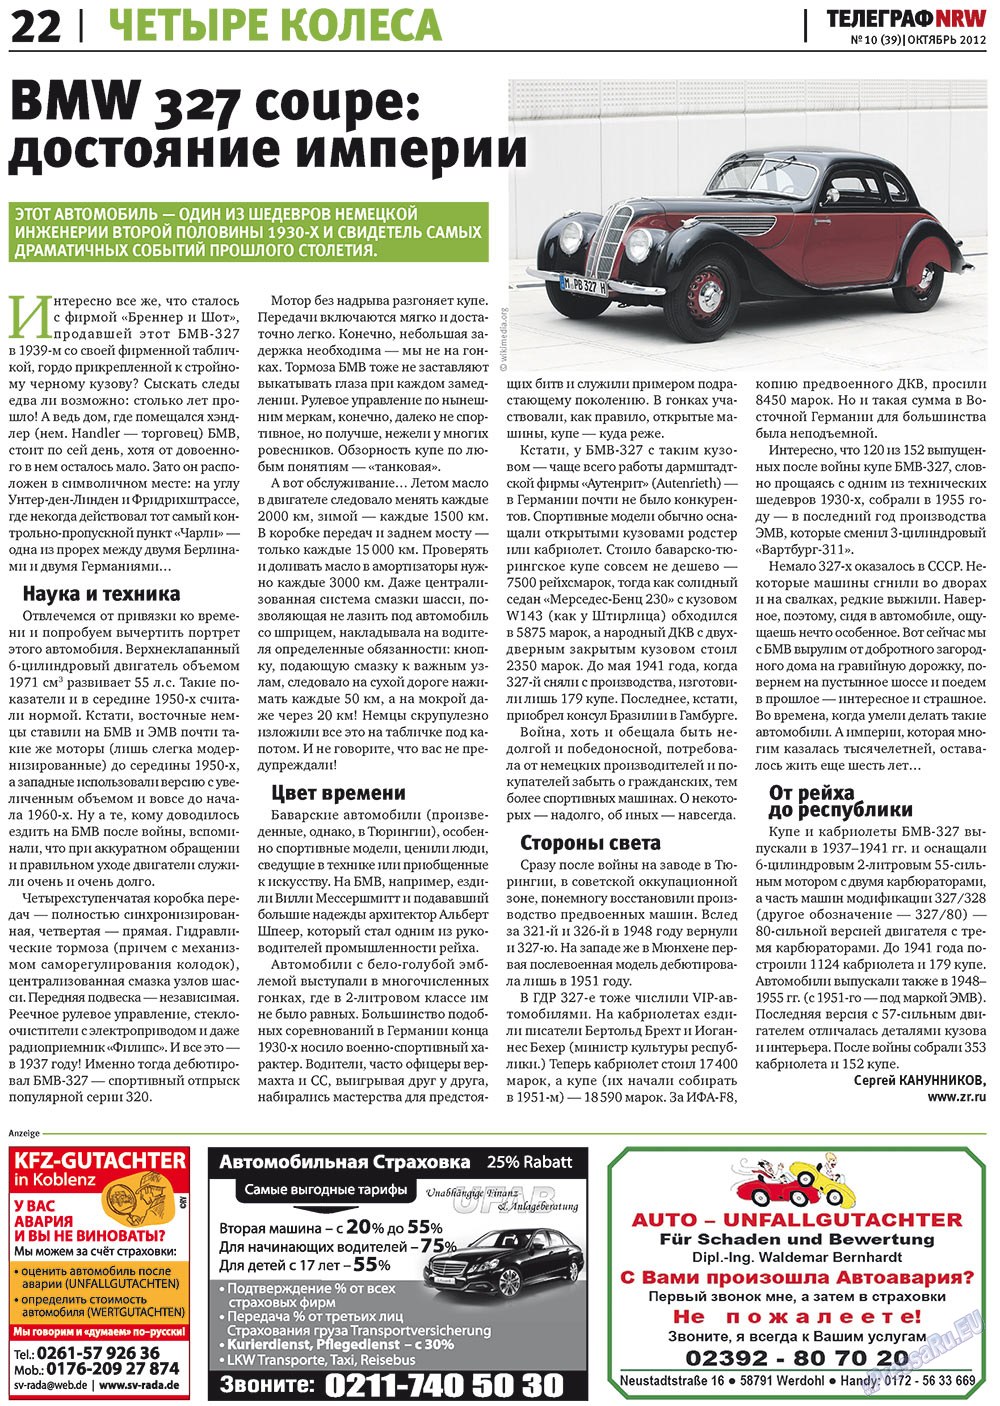 Телеграф NRW, газета. 2012 №10 стр.22